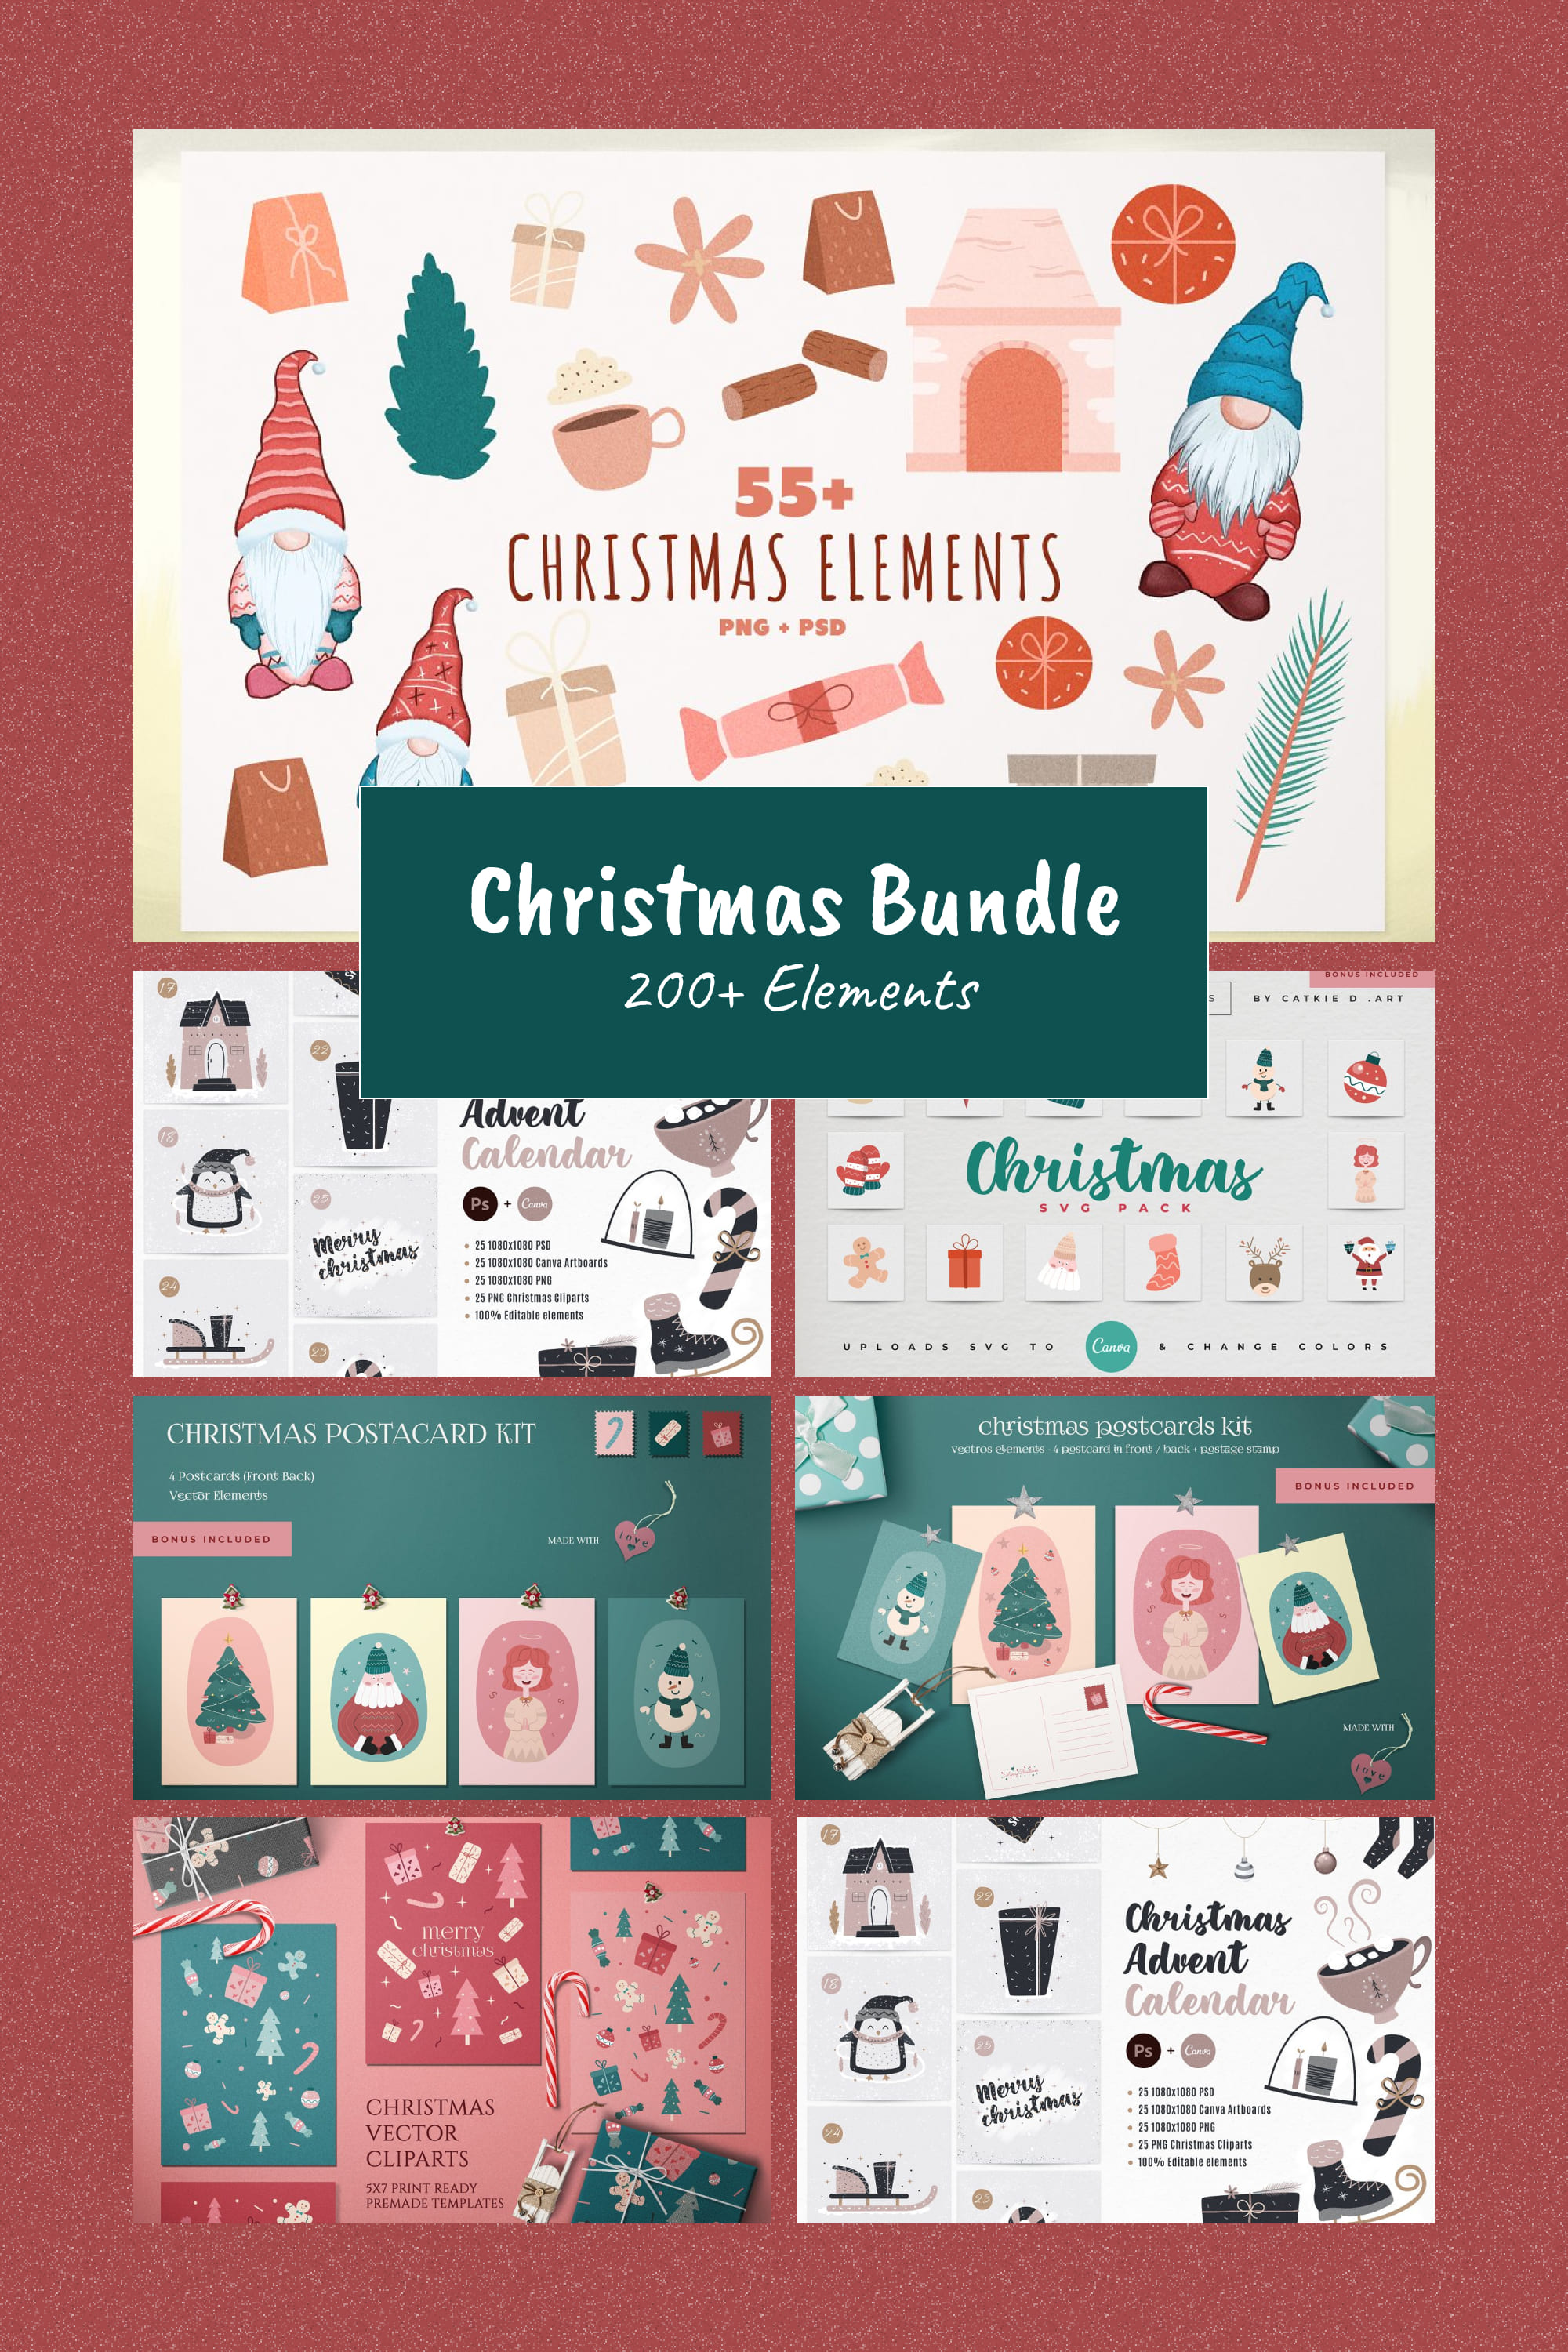 The Christmas Bundle 200 Elements Pinterest.